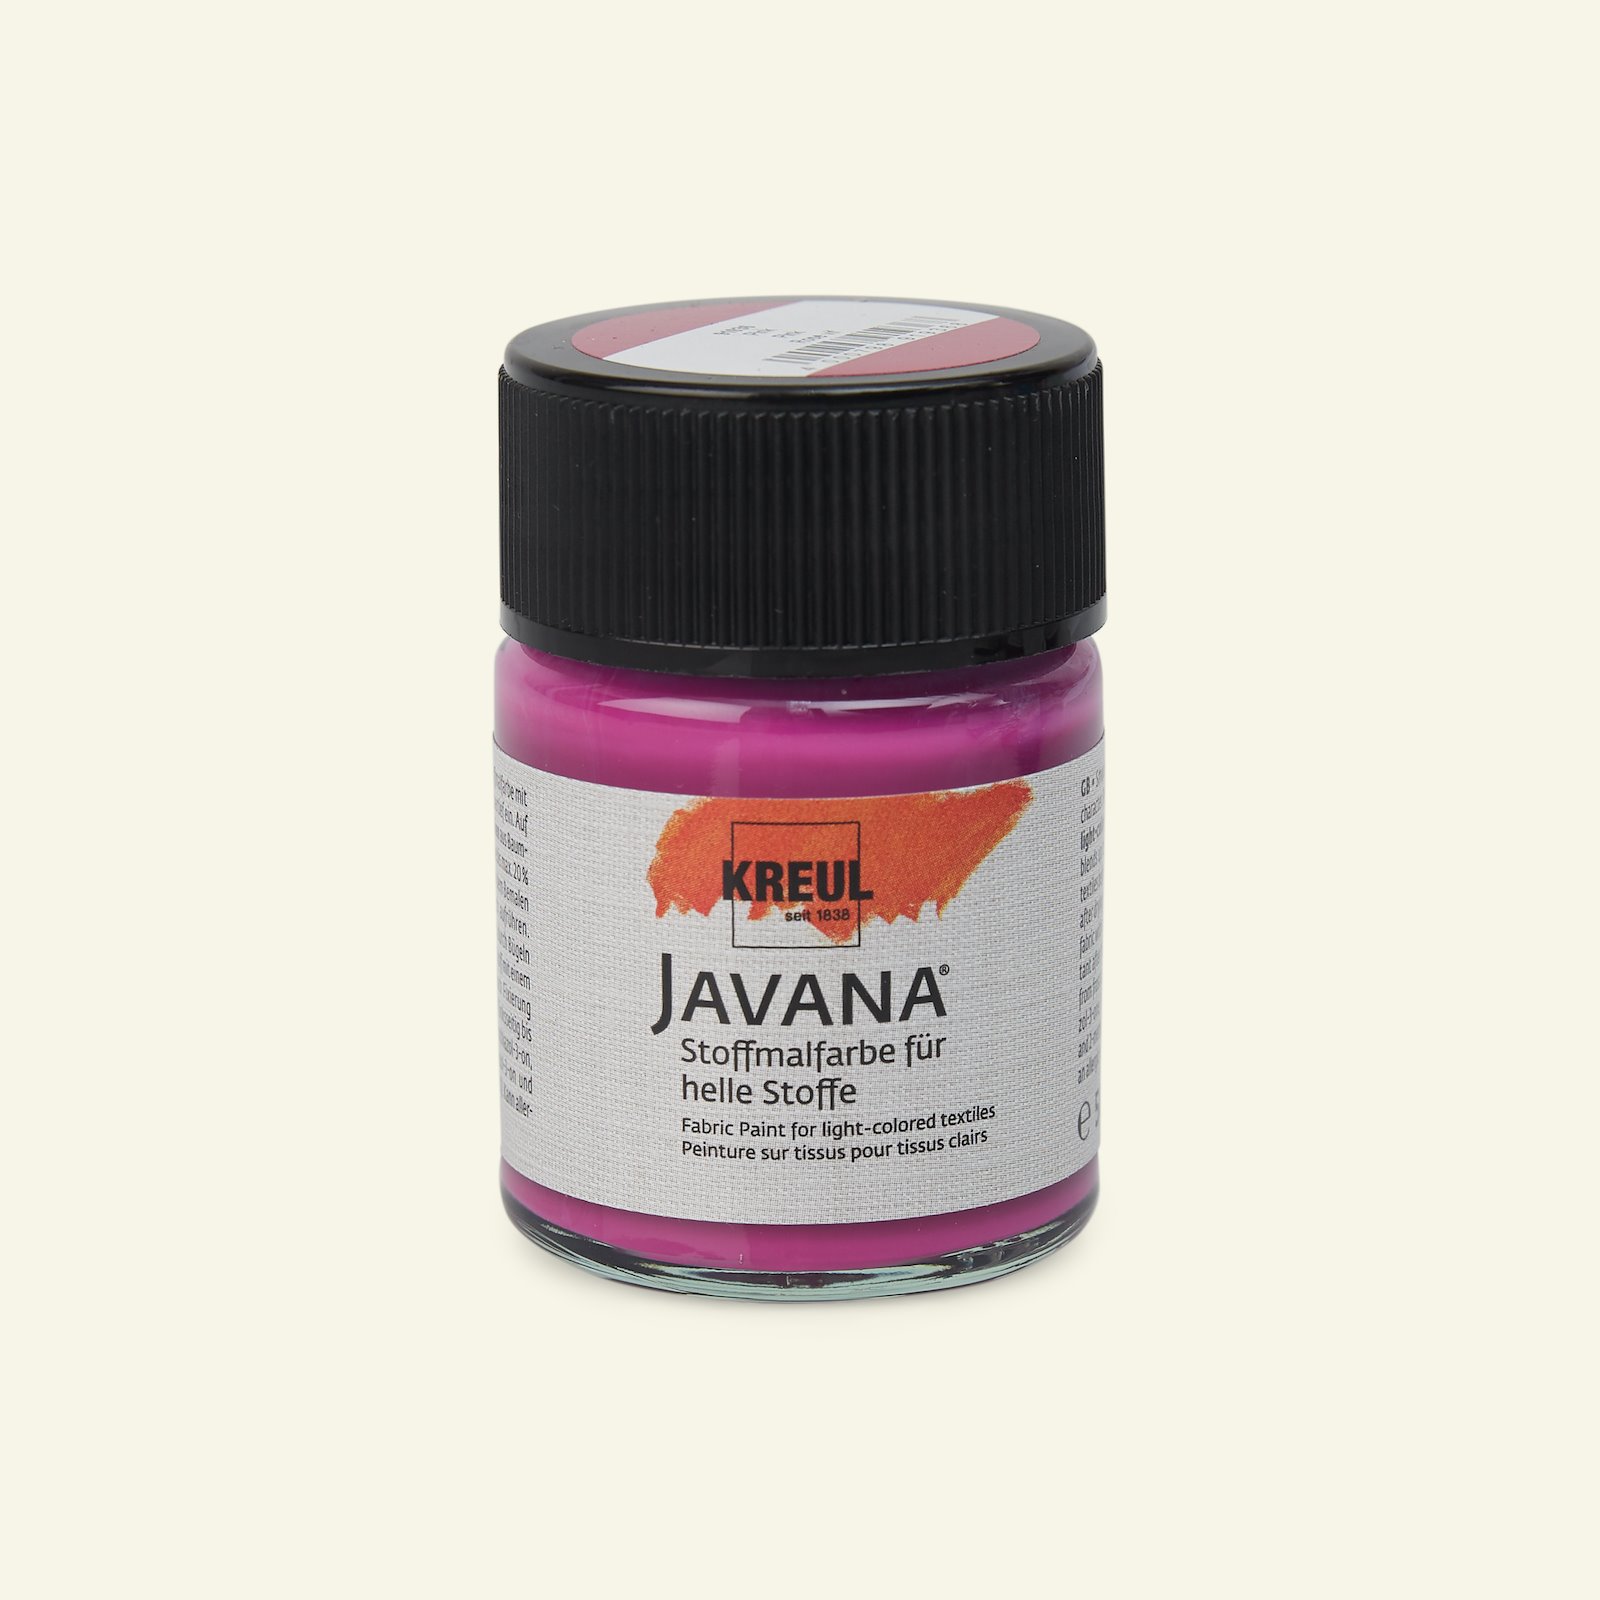 Javana tekstilfarge, rosa, 50ml 29608_pack_b